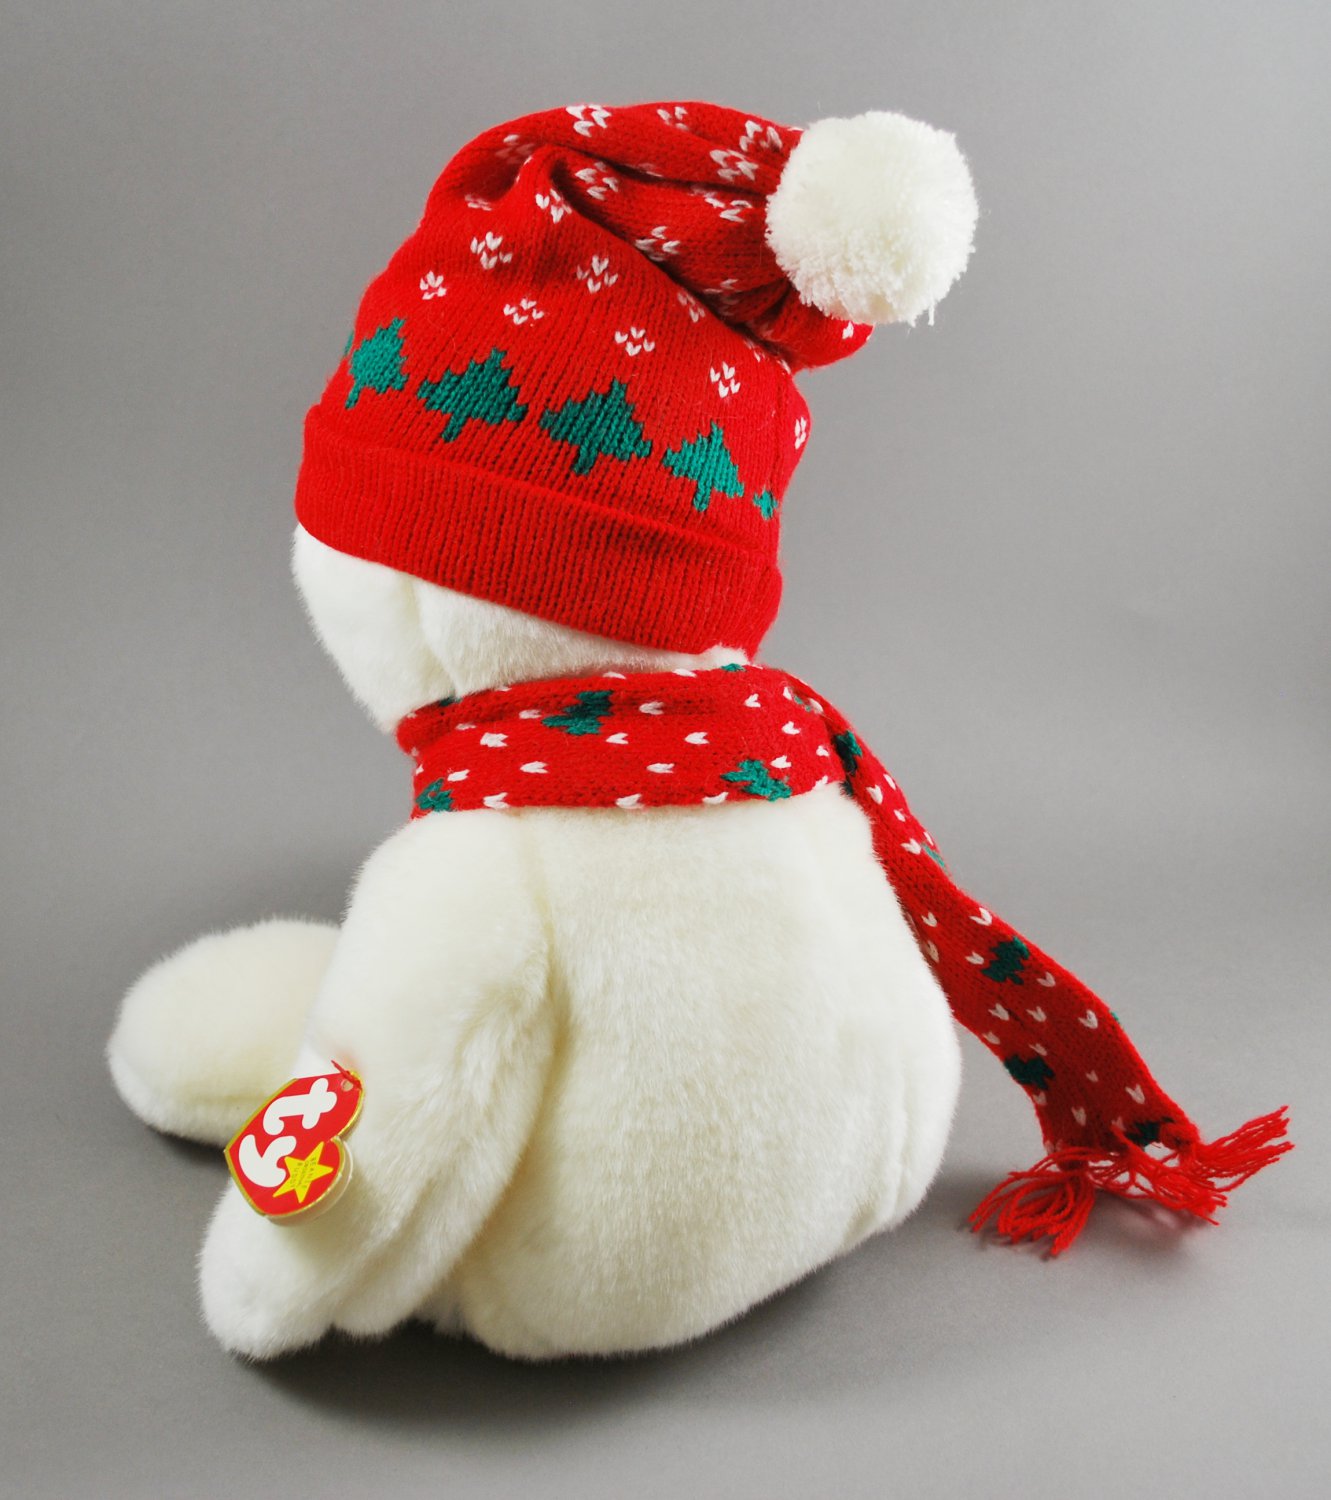 Winter Holiday Snowboy the Snowman Ty Beanie Buddy Plush Style 9342